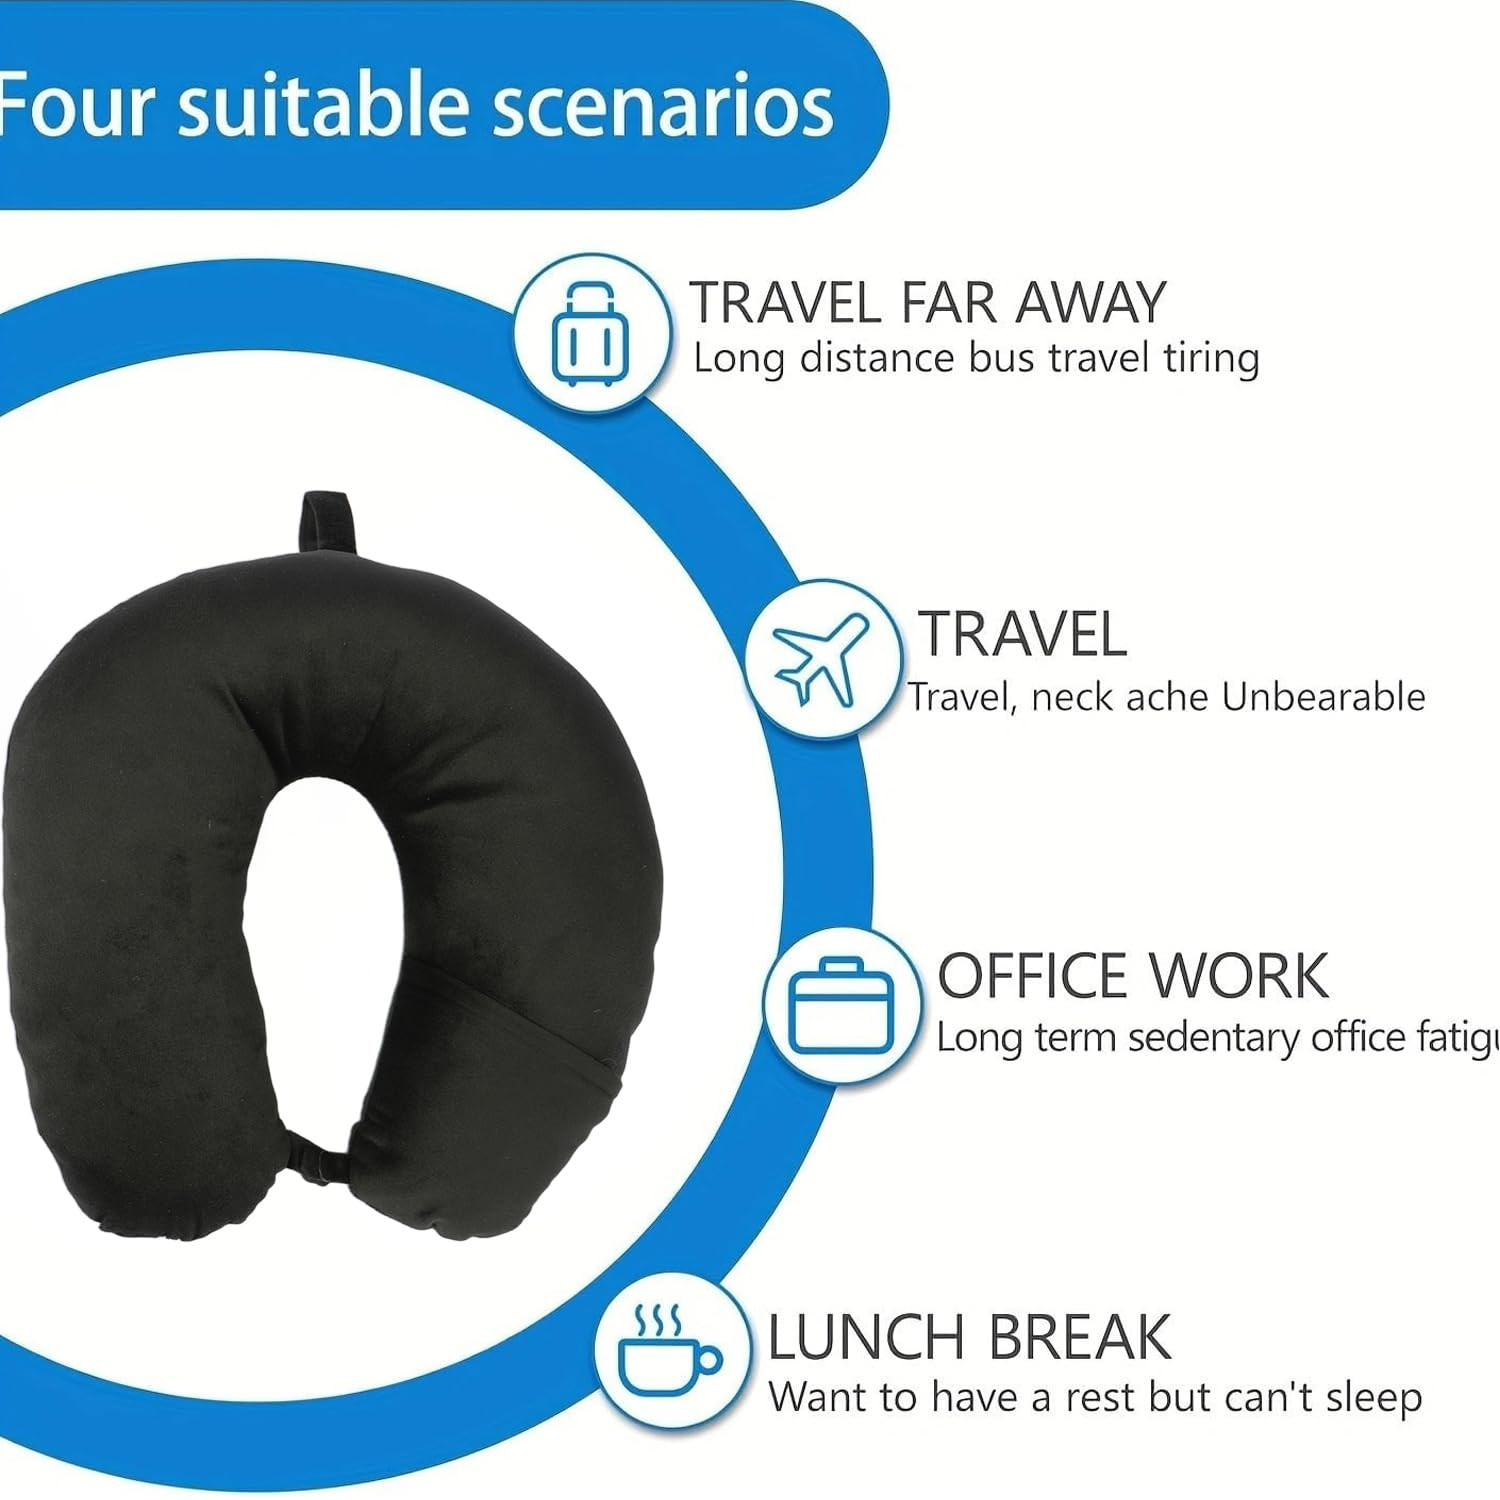 Kuber Industries Travel Neck Pillow|Neck Support Rest Pillow|Velvet Cover With Microfiber Fillling (Black)